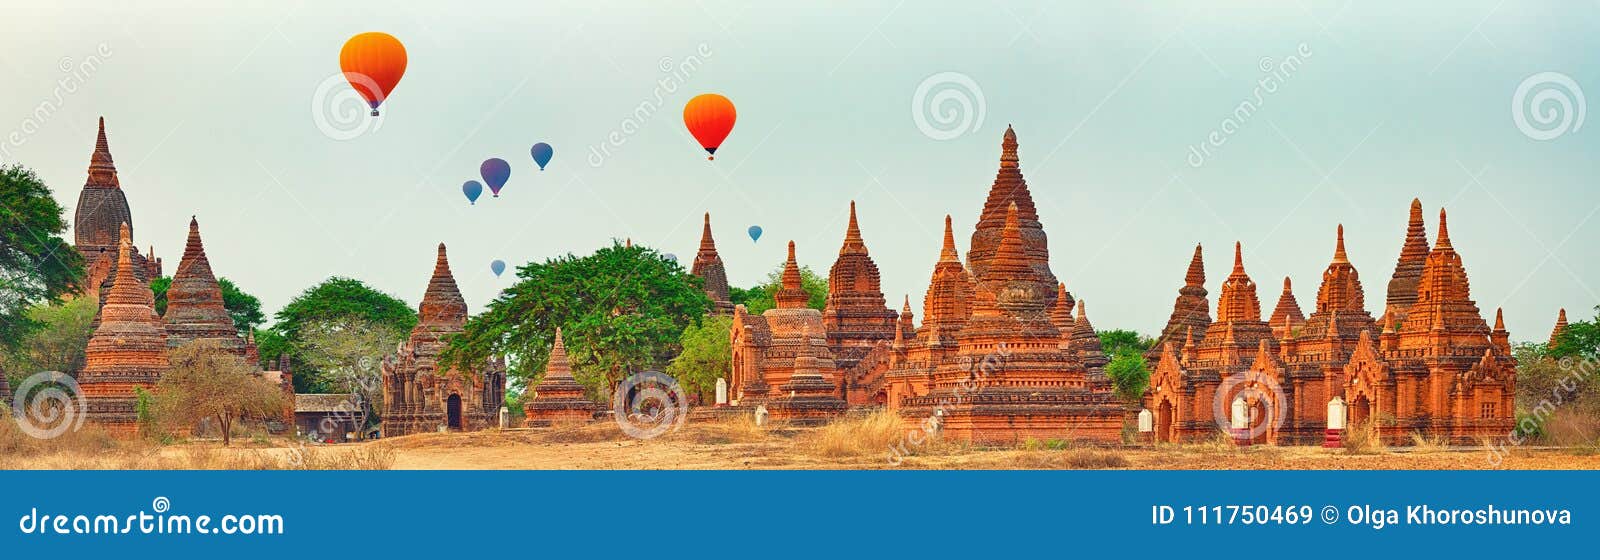 balloons over temples in bagan. myanmar. panorama